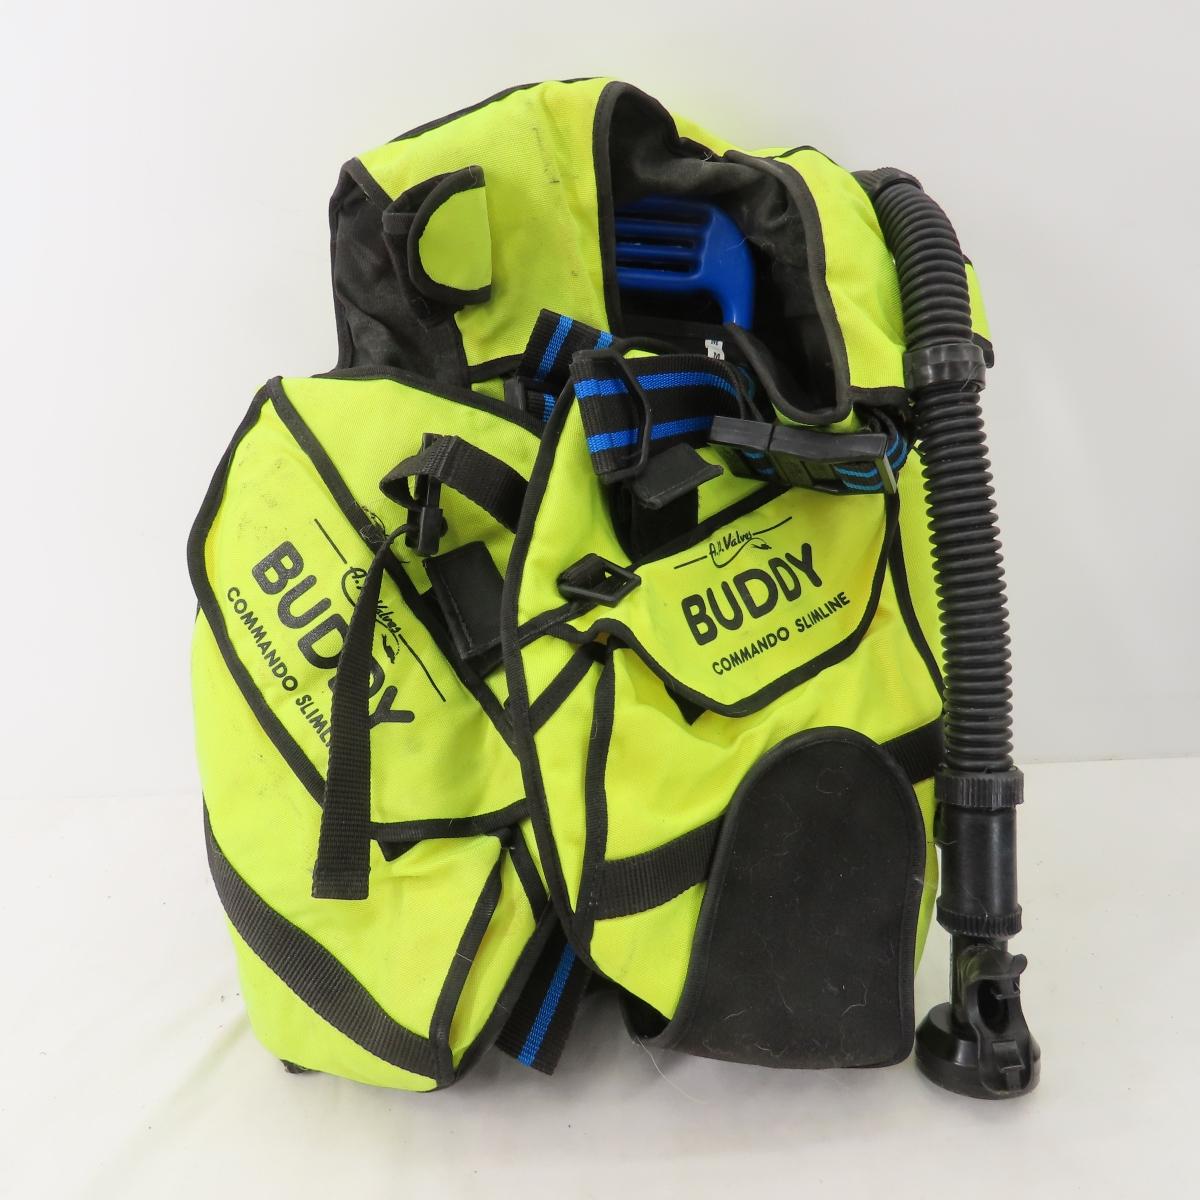 Commando slimline vest and other snorkel gear